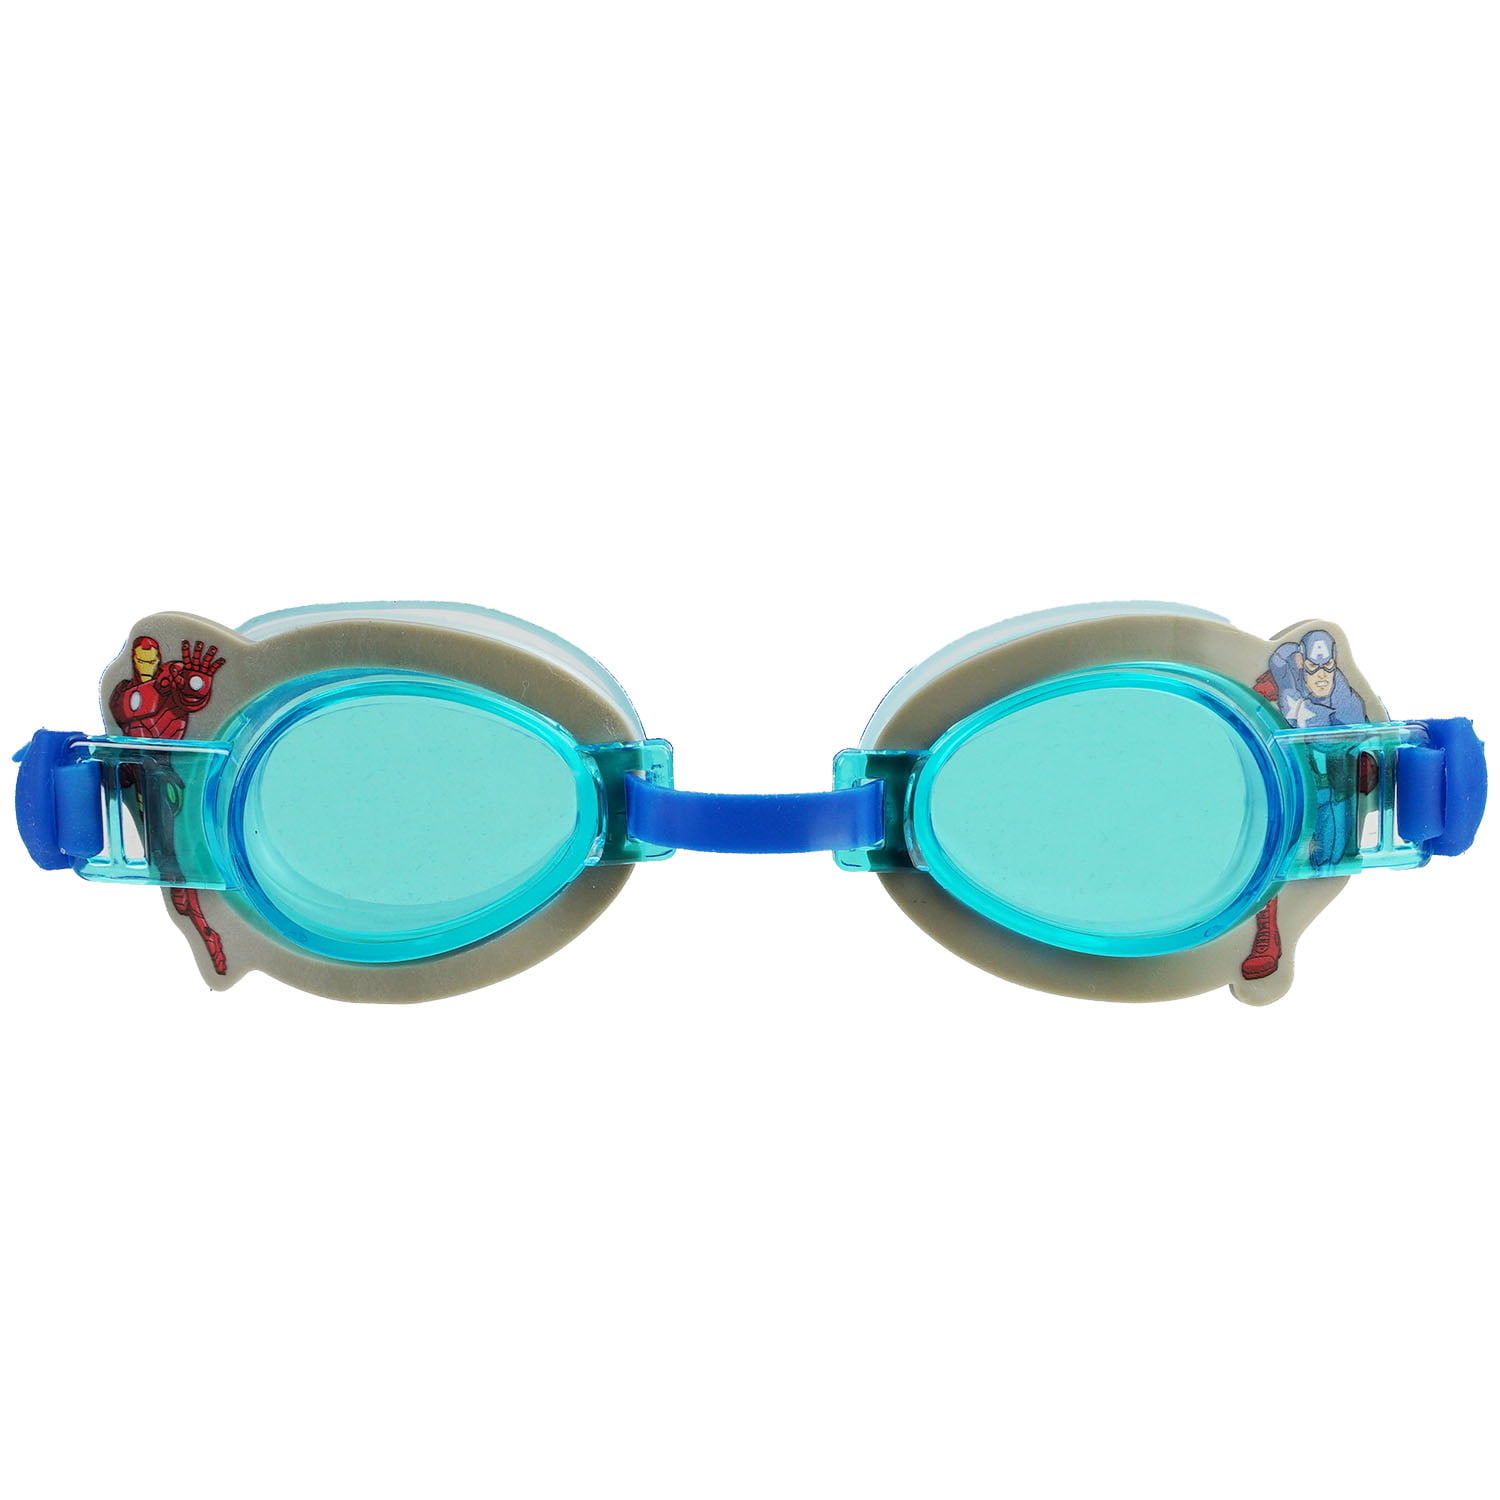 Marvel Avengers Initiative Children’s Swimming Goggles 3+ New & Sealed 